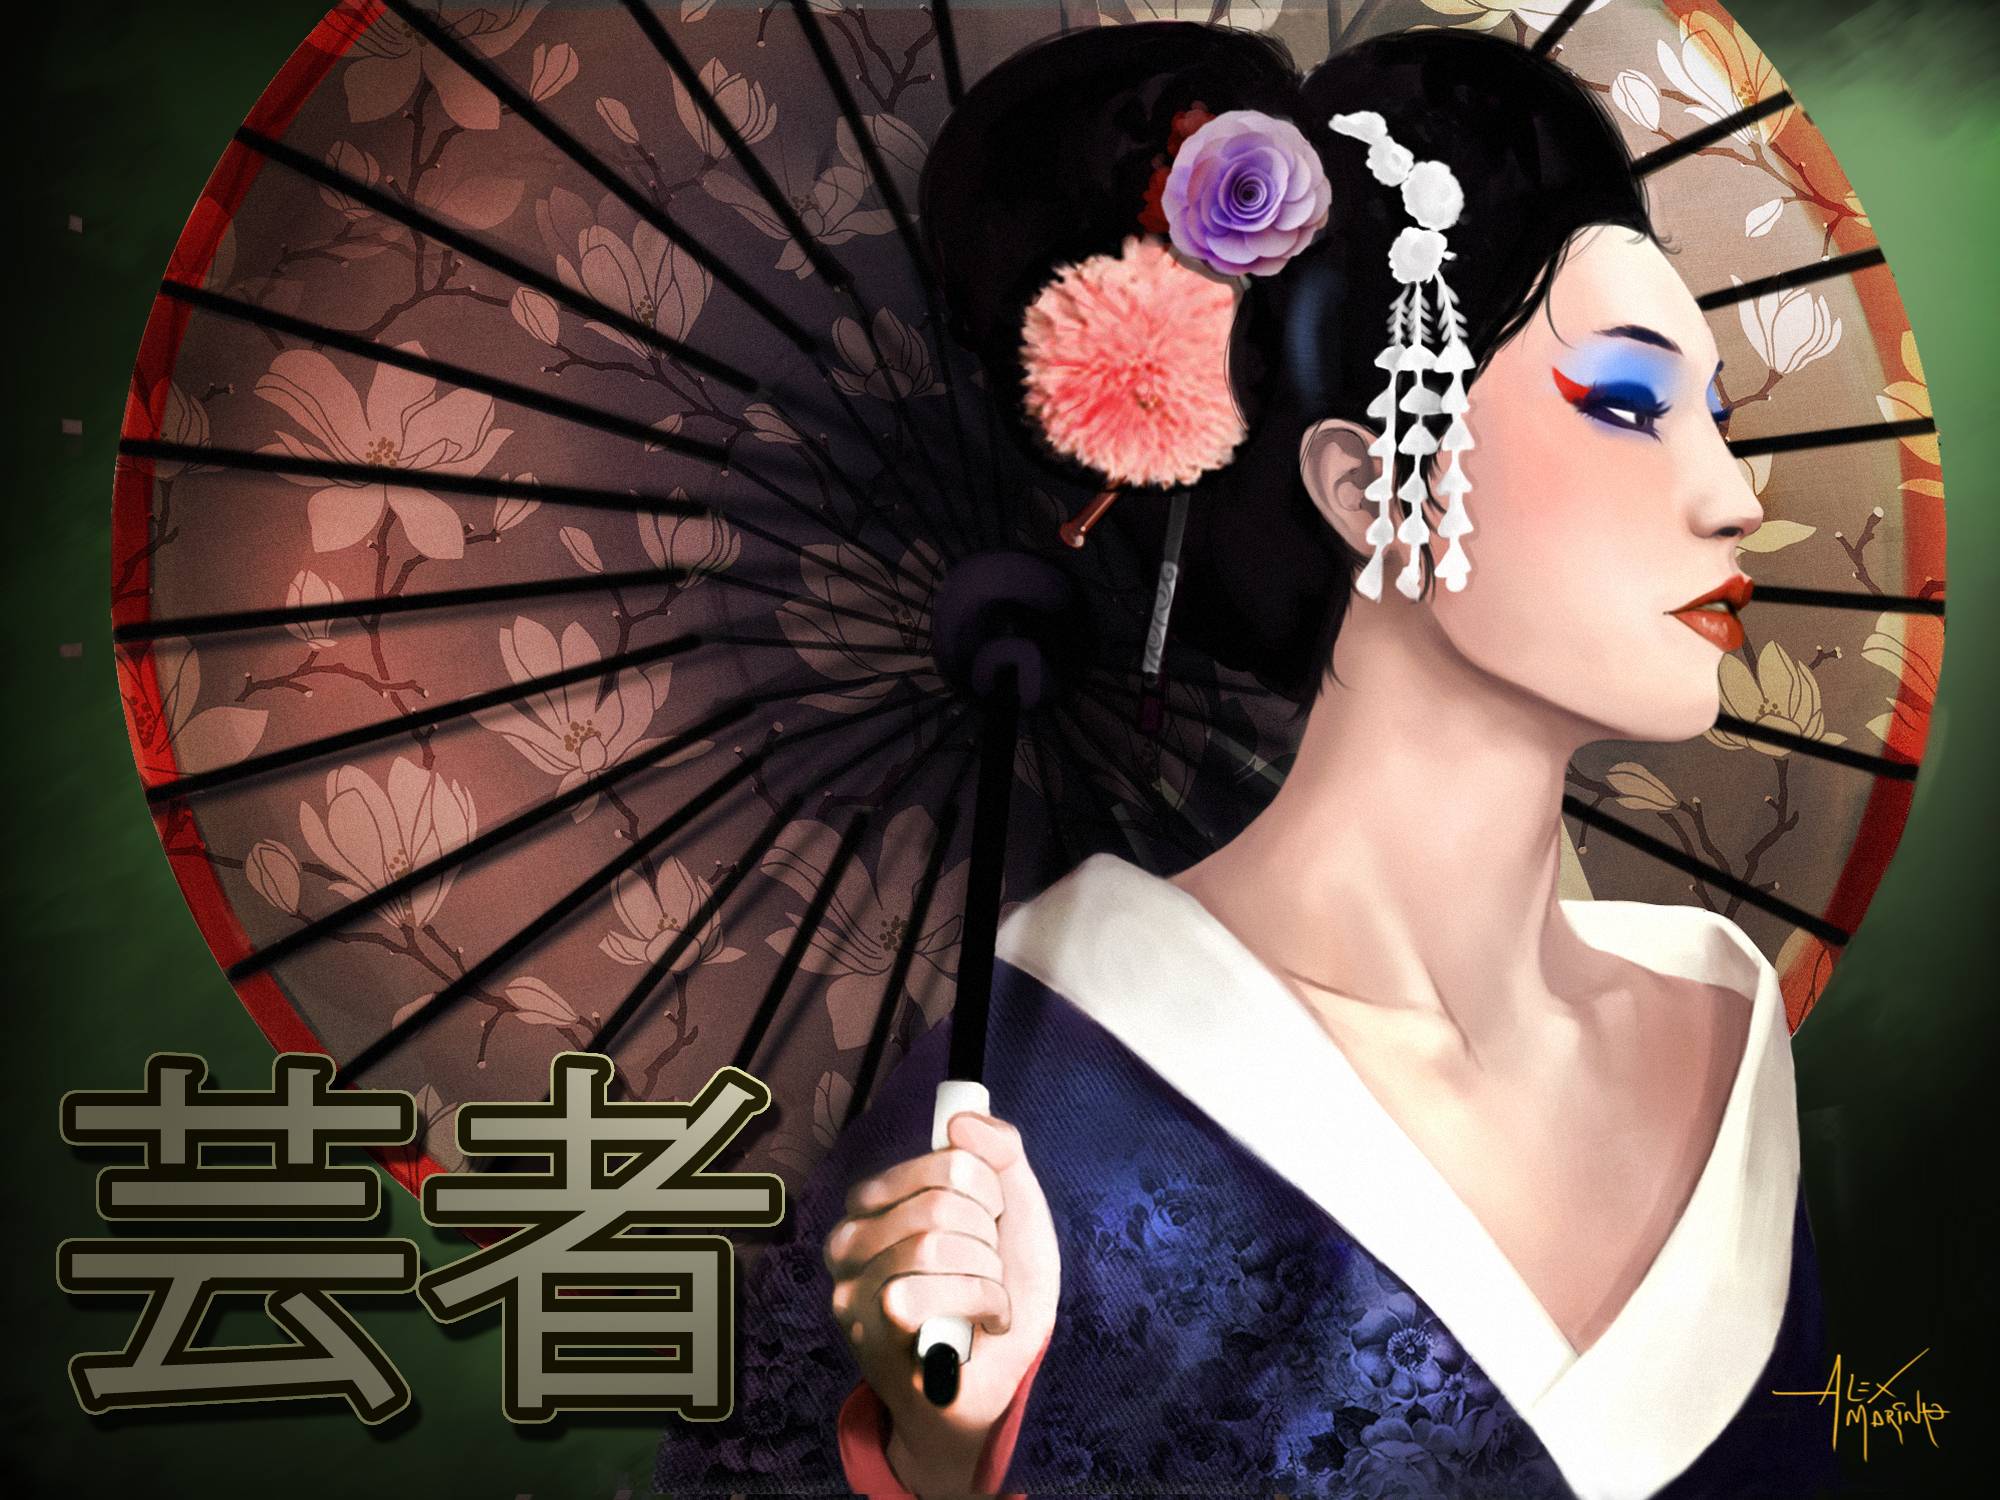 style, characters, geisha wallpaper and image